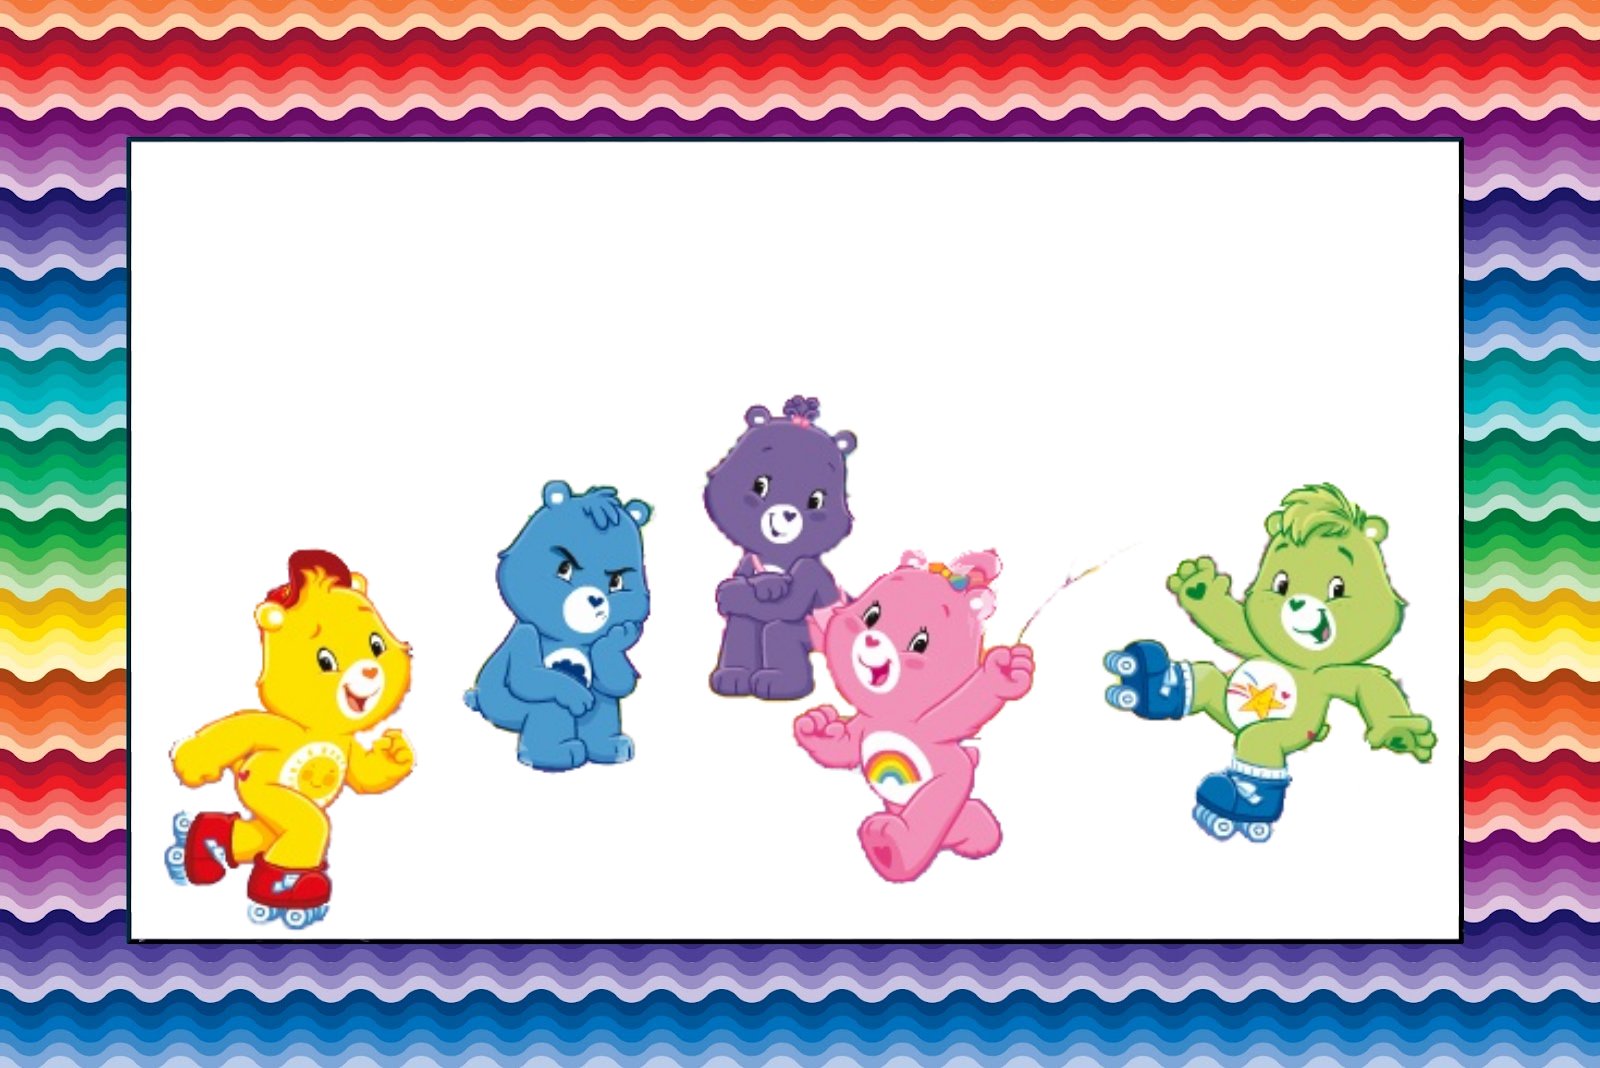 care-bears-with-rainbow-free-printable-invitations-oh-my-fiesta